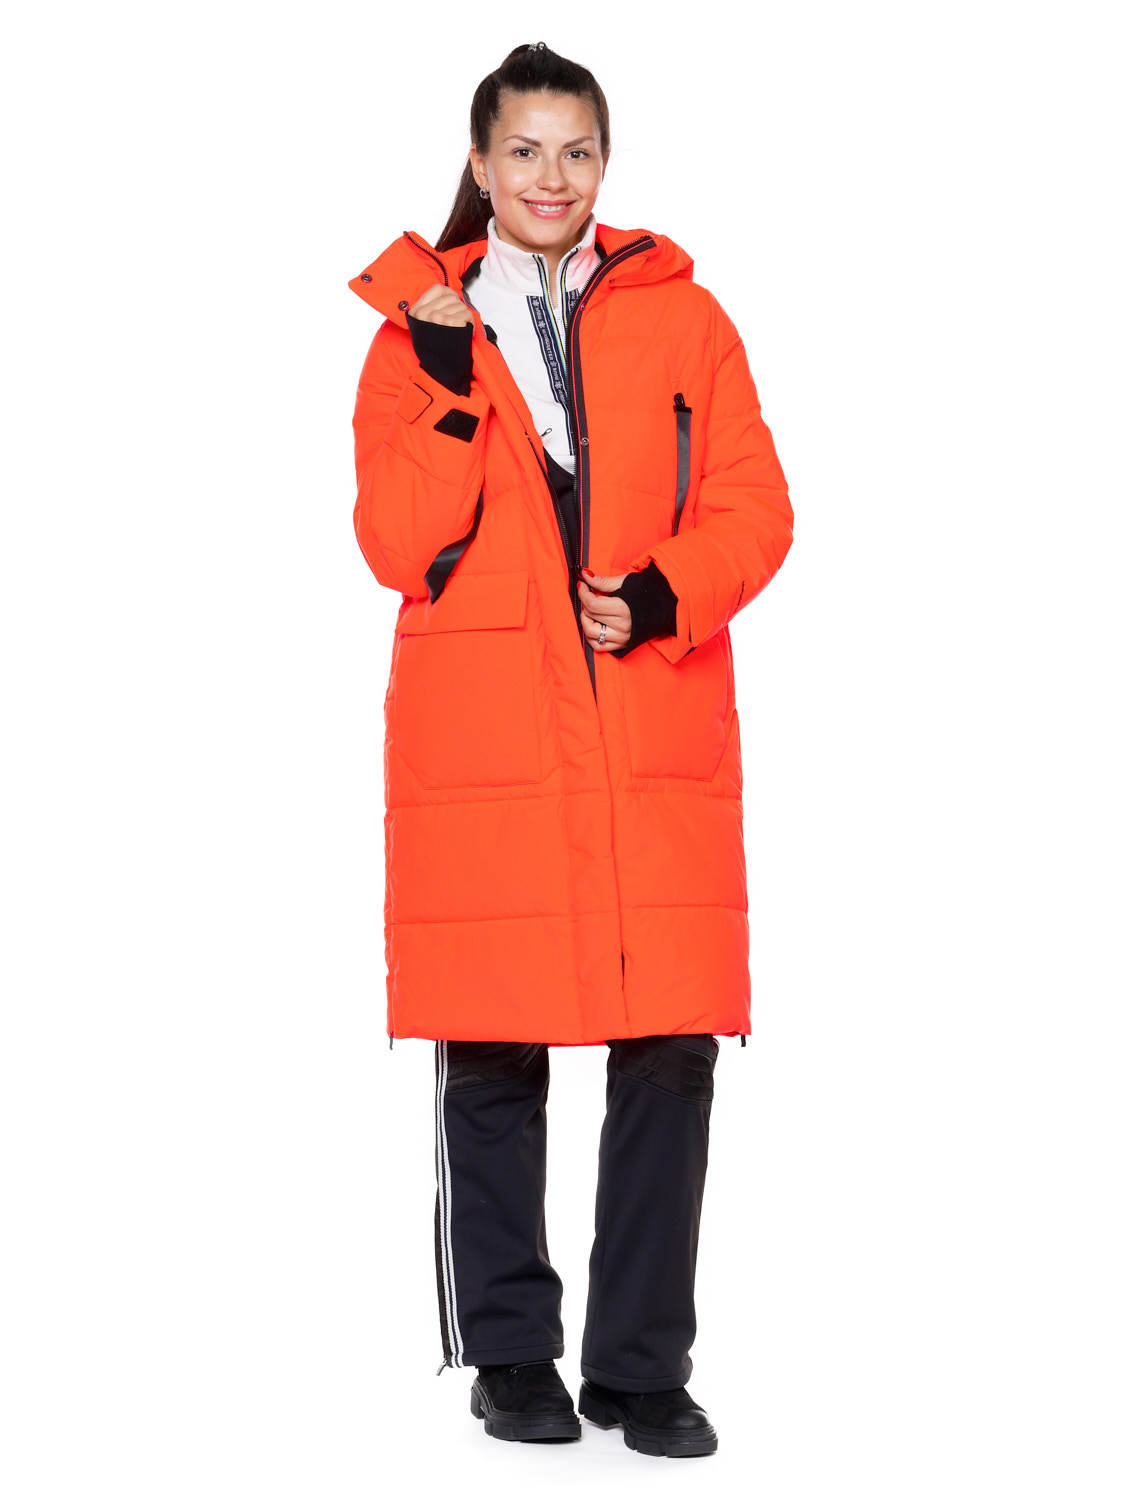 Пальто B-8872 Оранжевый